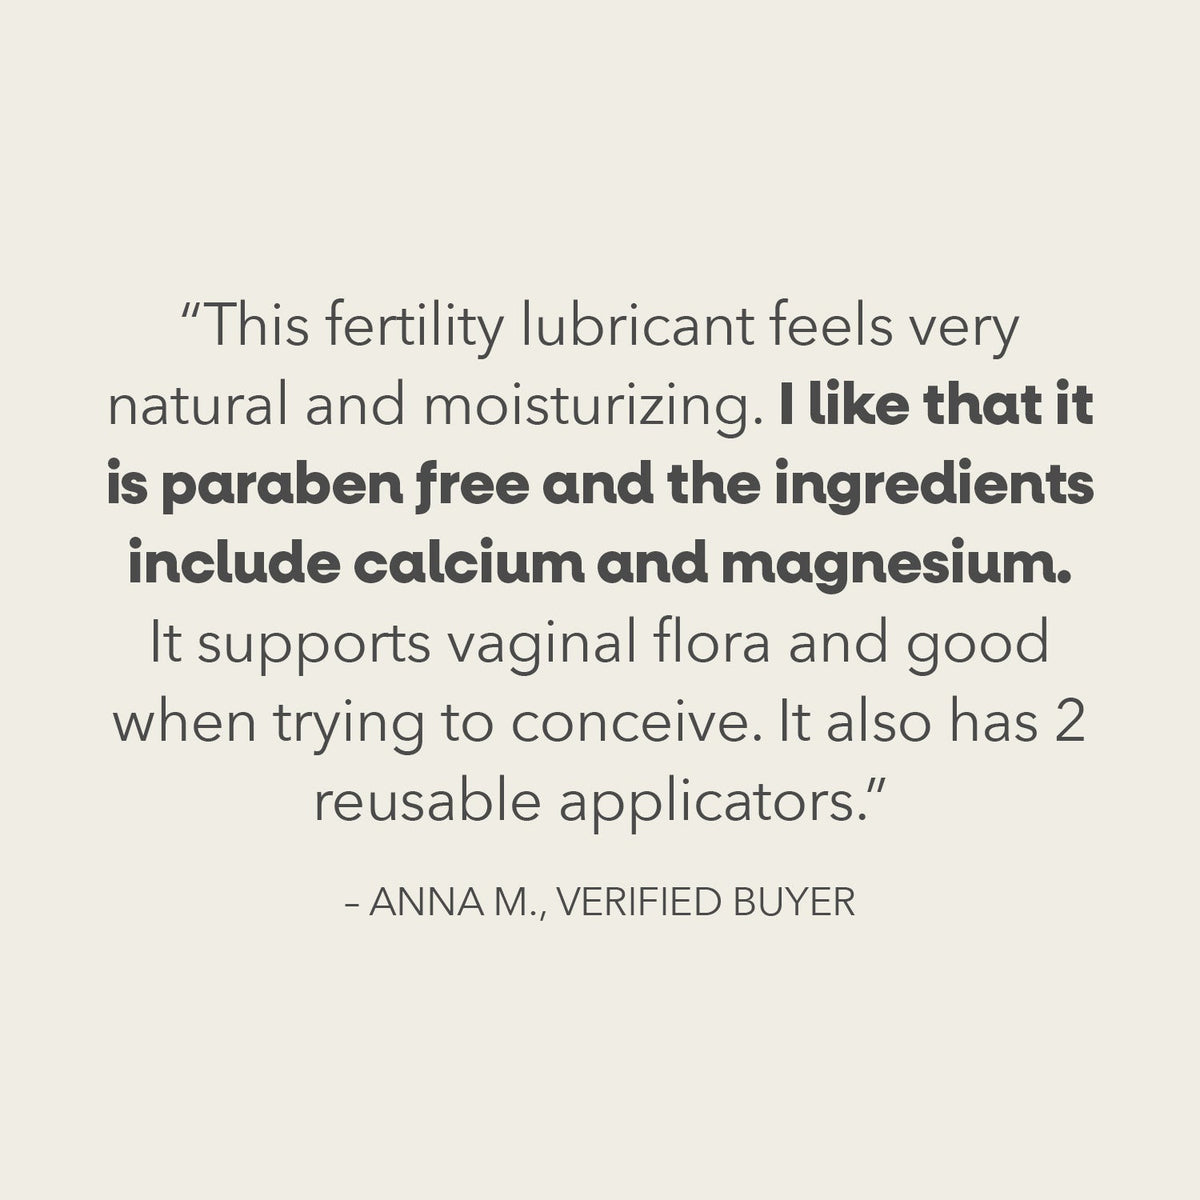 BioGenesis™ Fertility Lubricant Products